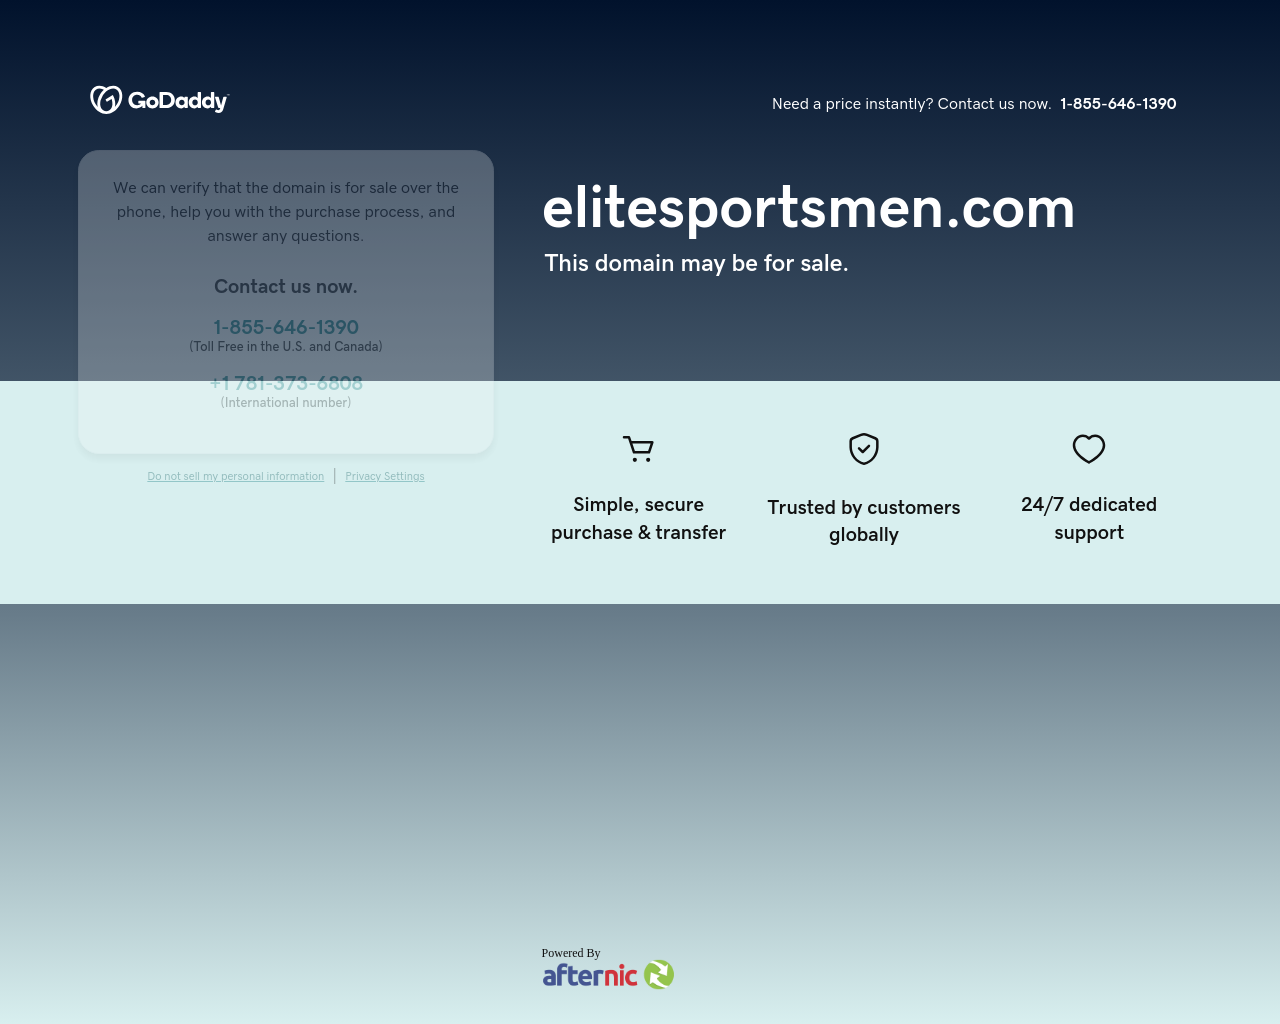 elitesportsmen.com